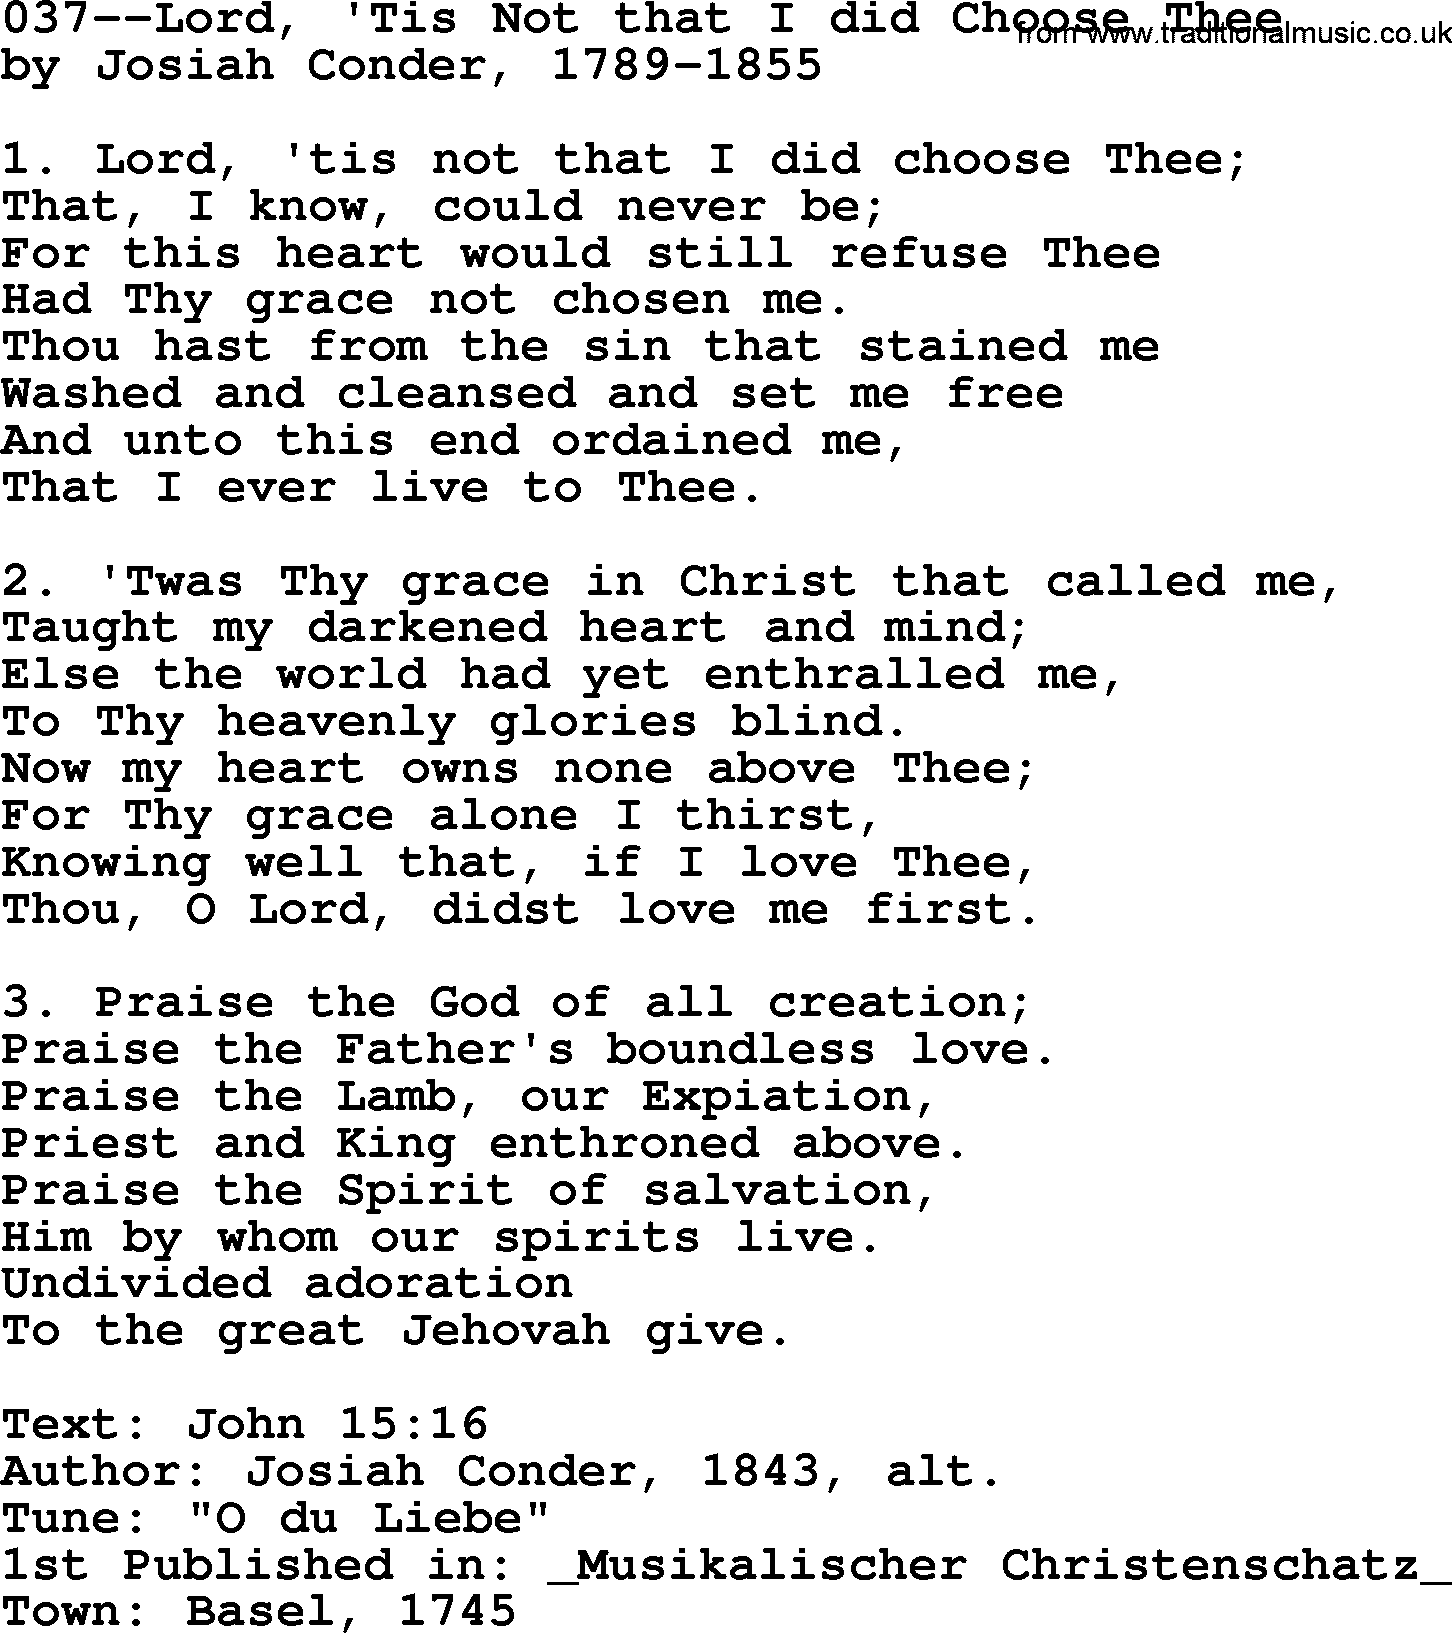 Lutheran Hymn: 037--Lord, 'Tis Not that I did Choose Thee.txt lyrics with PDF